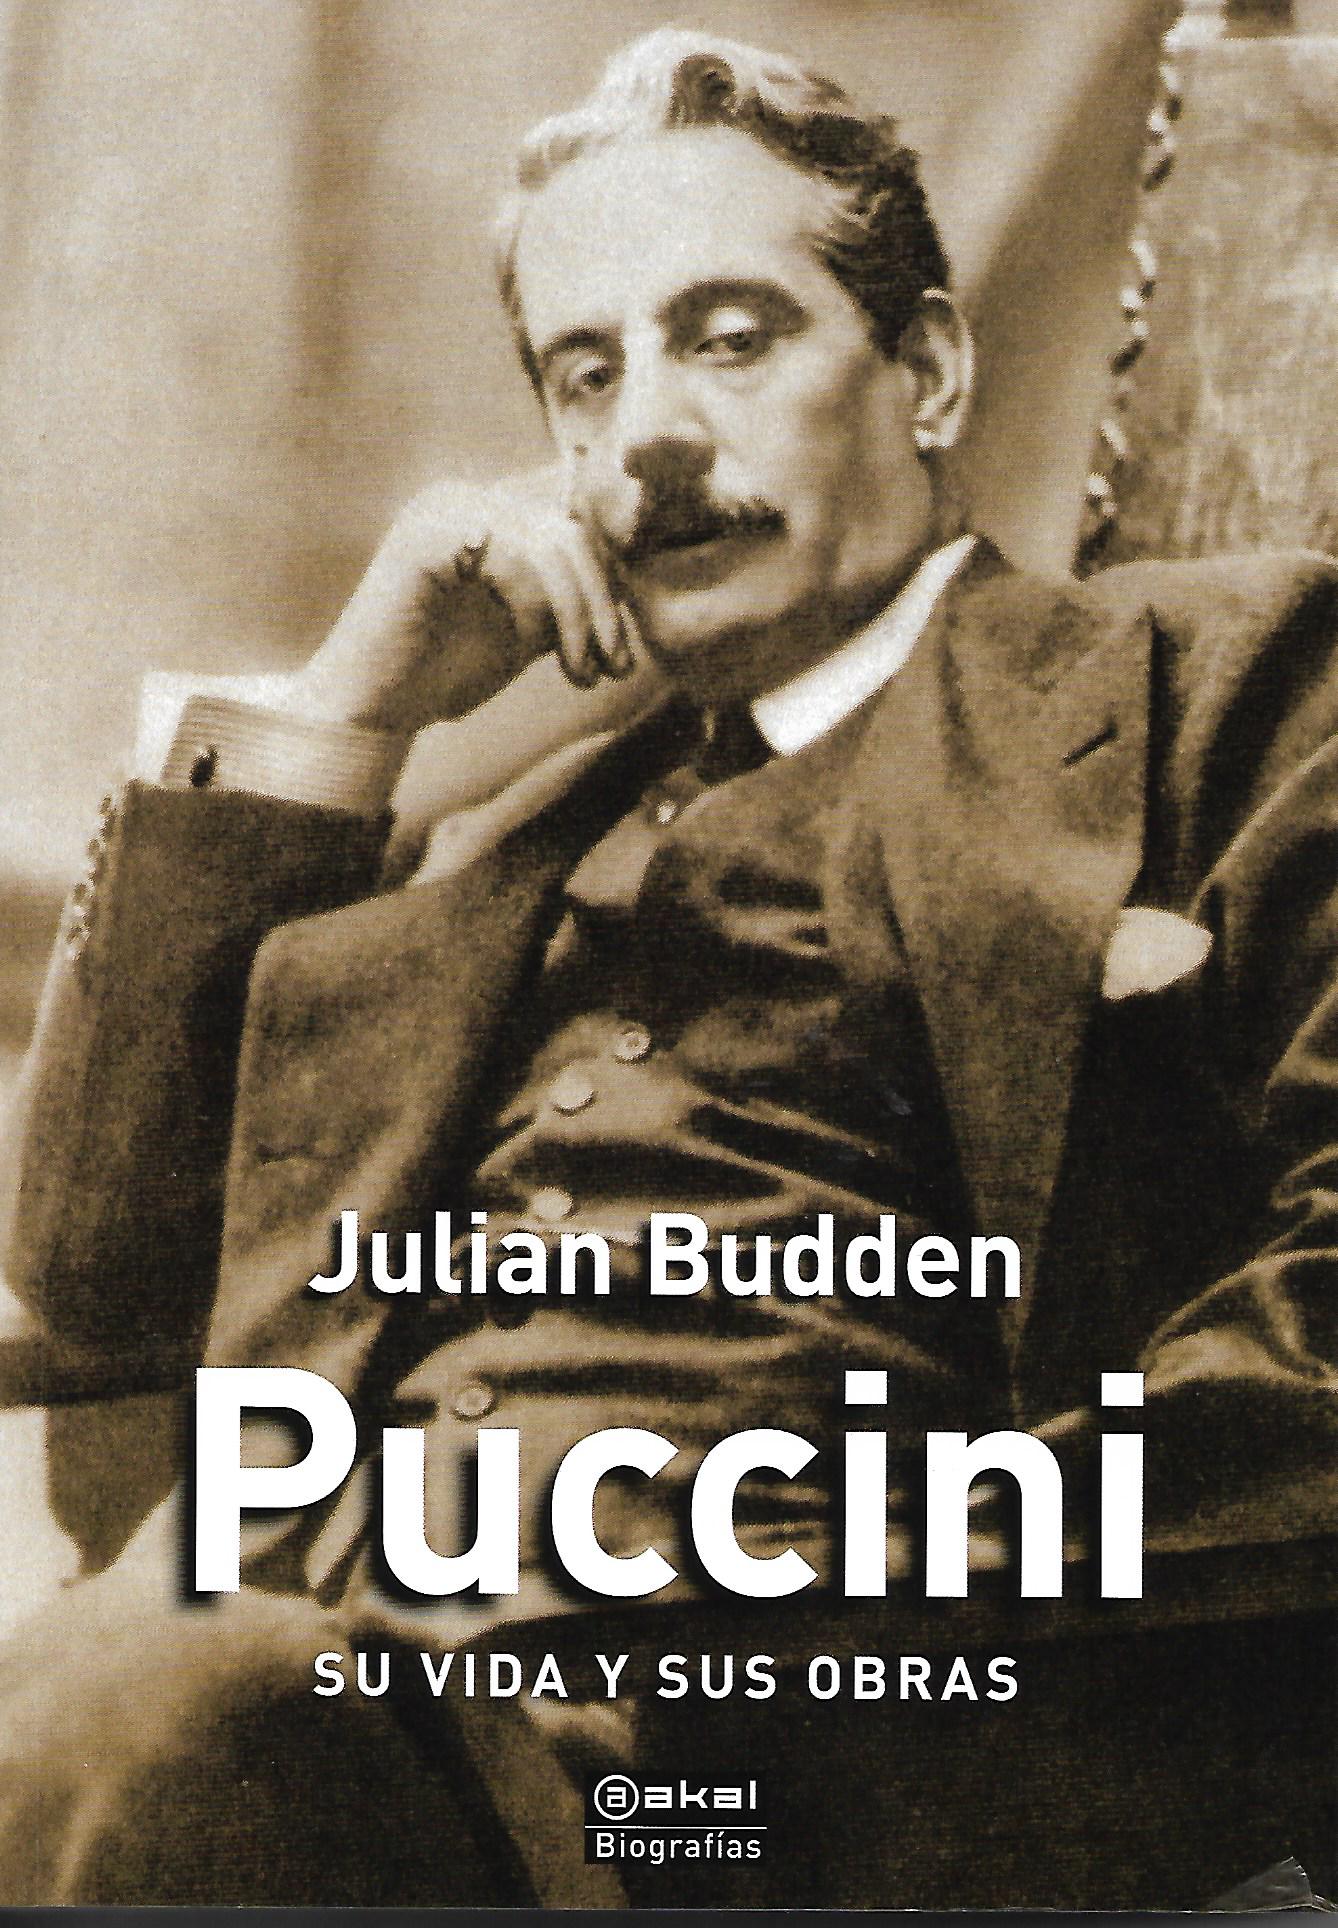 Puccini segons Budden